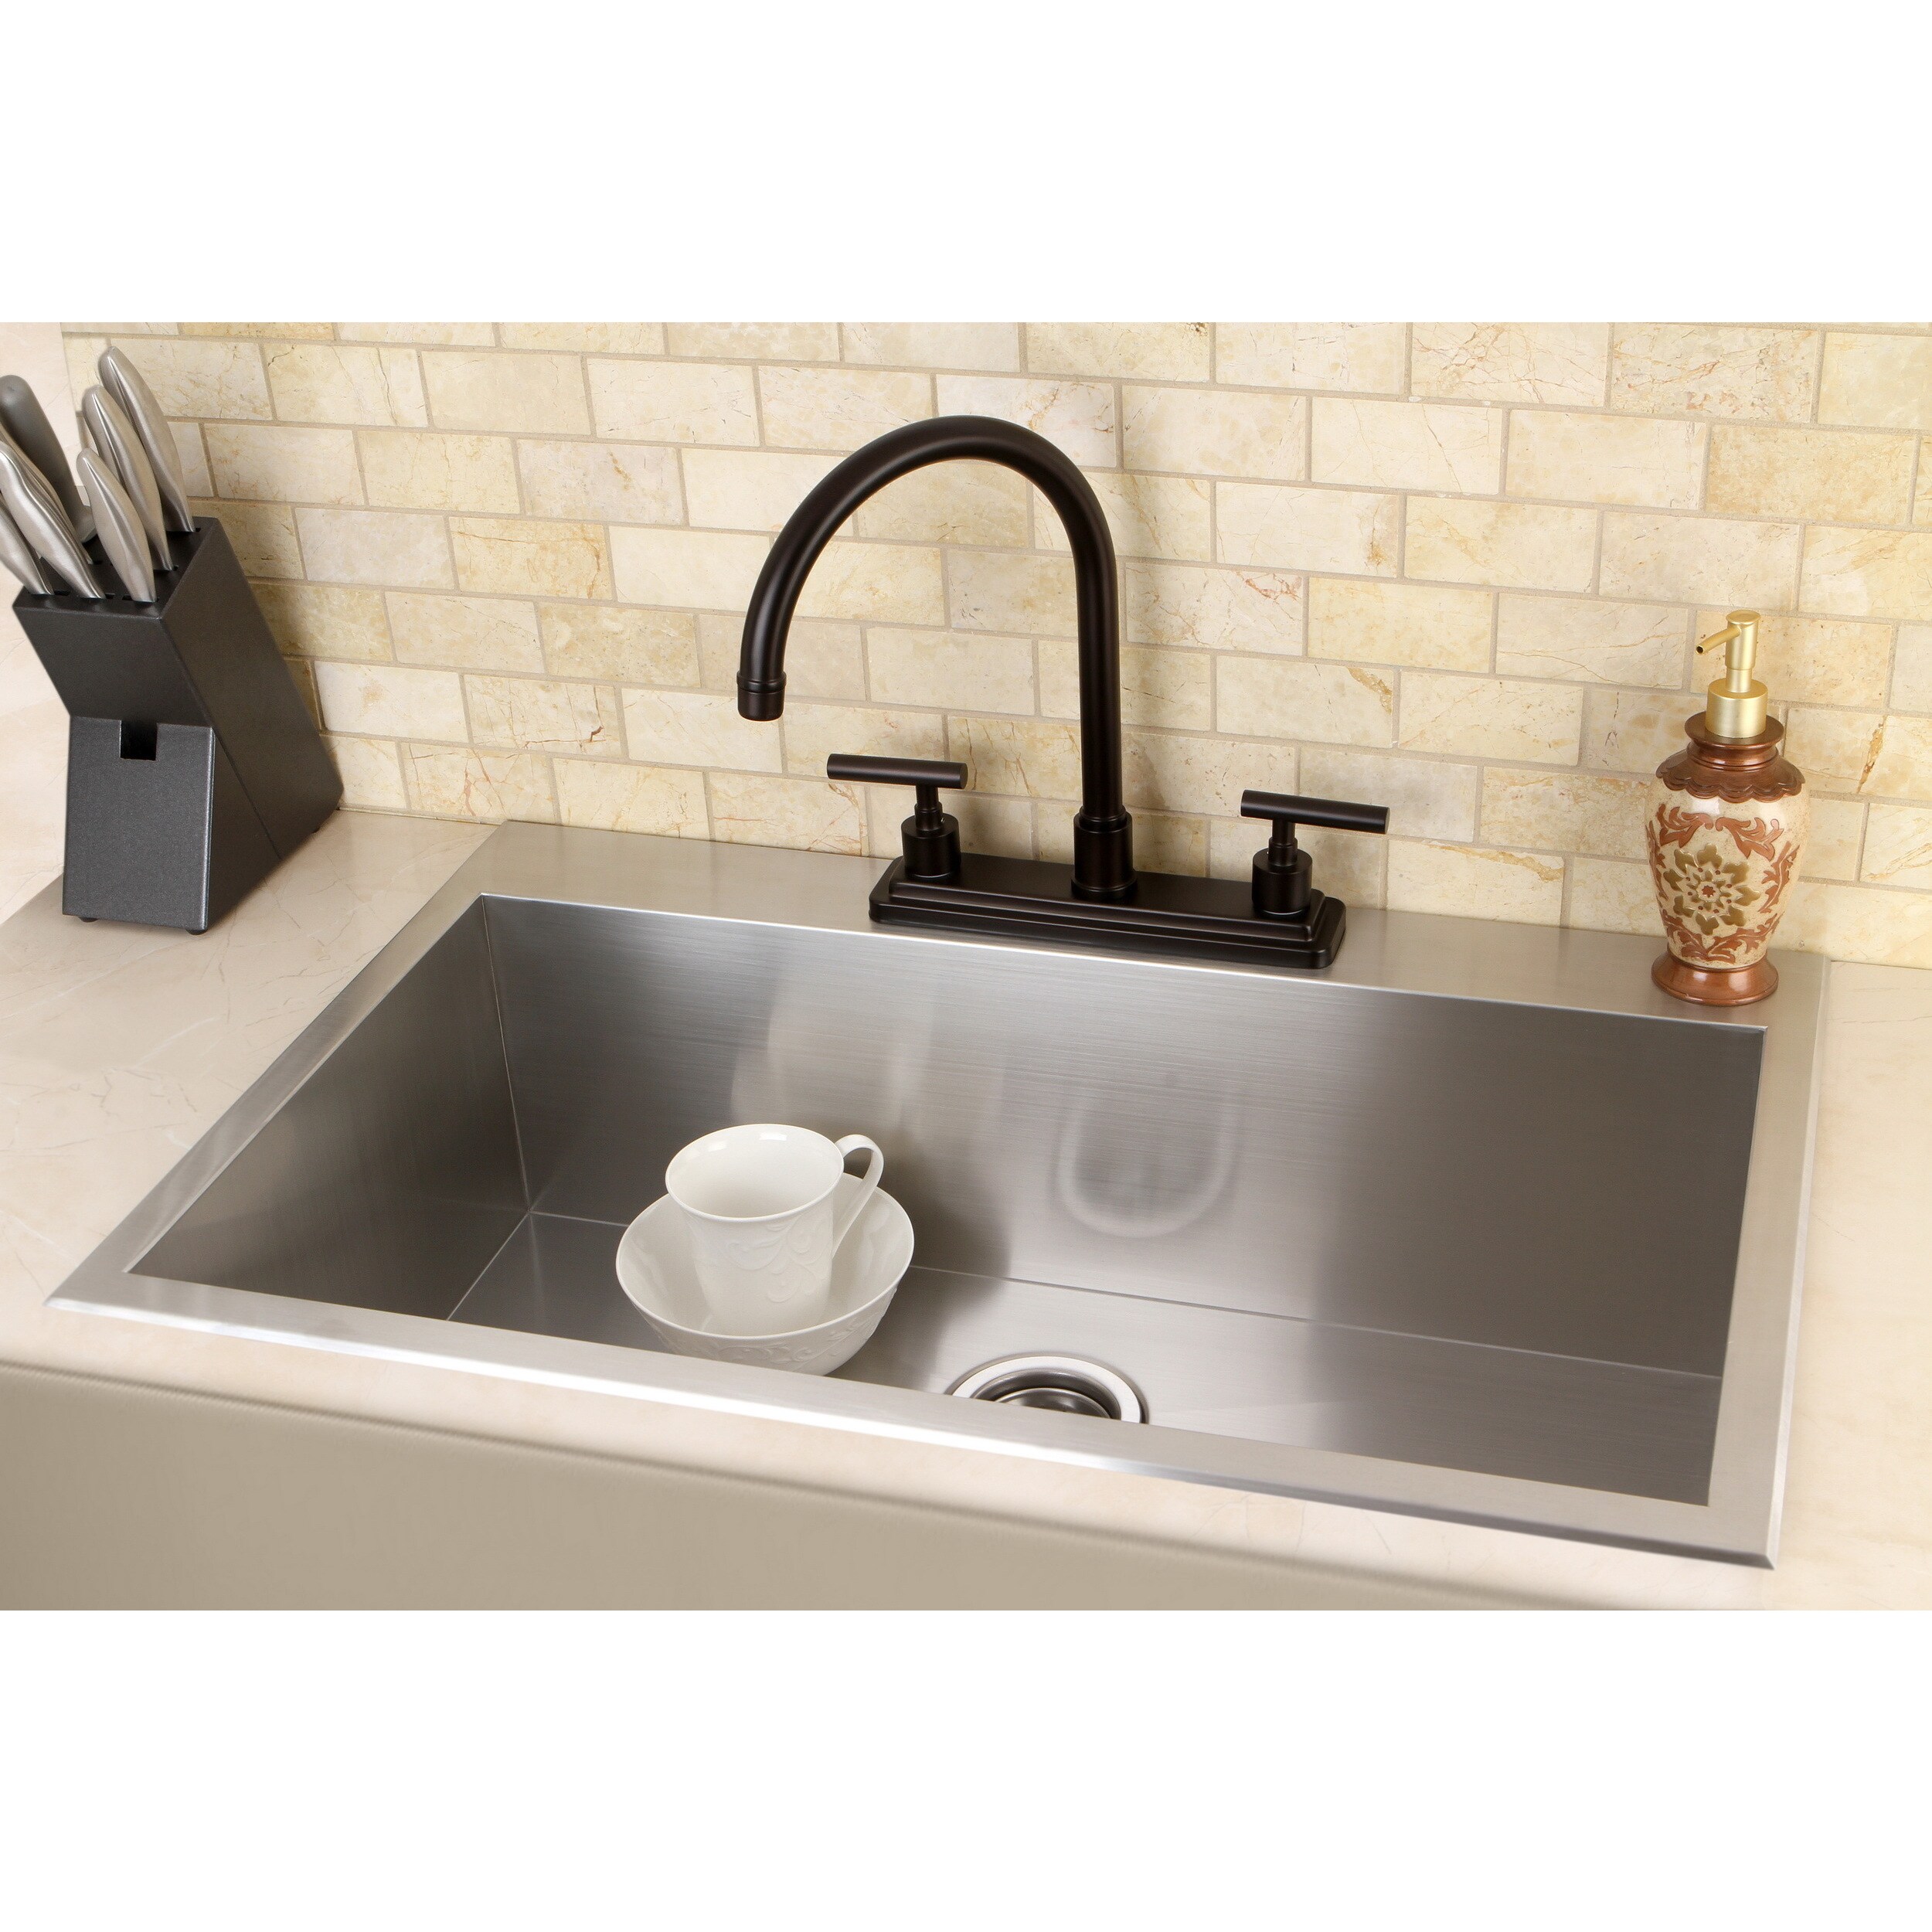 Topmount 31 5 Inch Single Bowl Stainless Steel Kitchen Sink Overstock Com Shopping The Best Deals On Kitchen Sinks